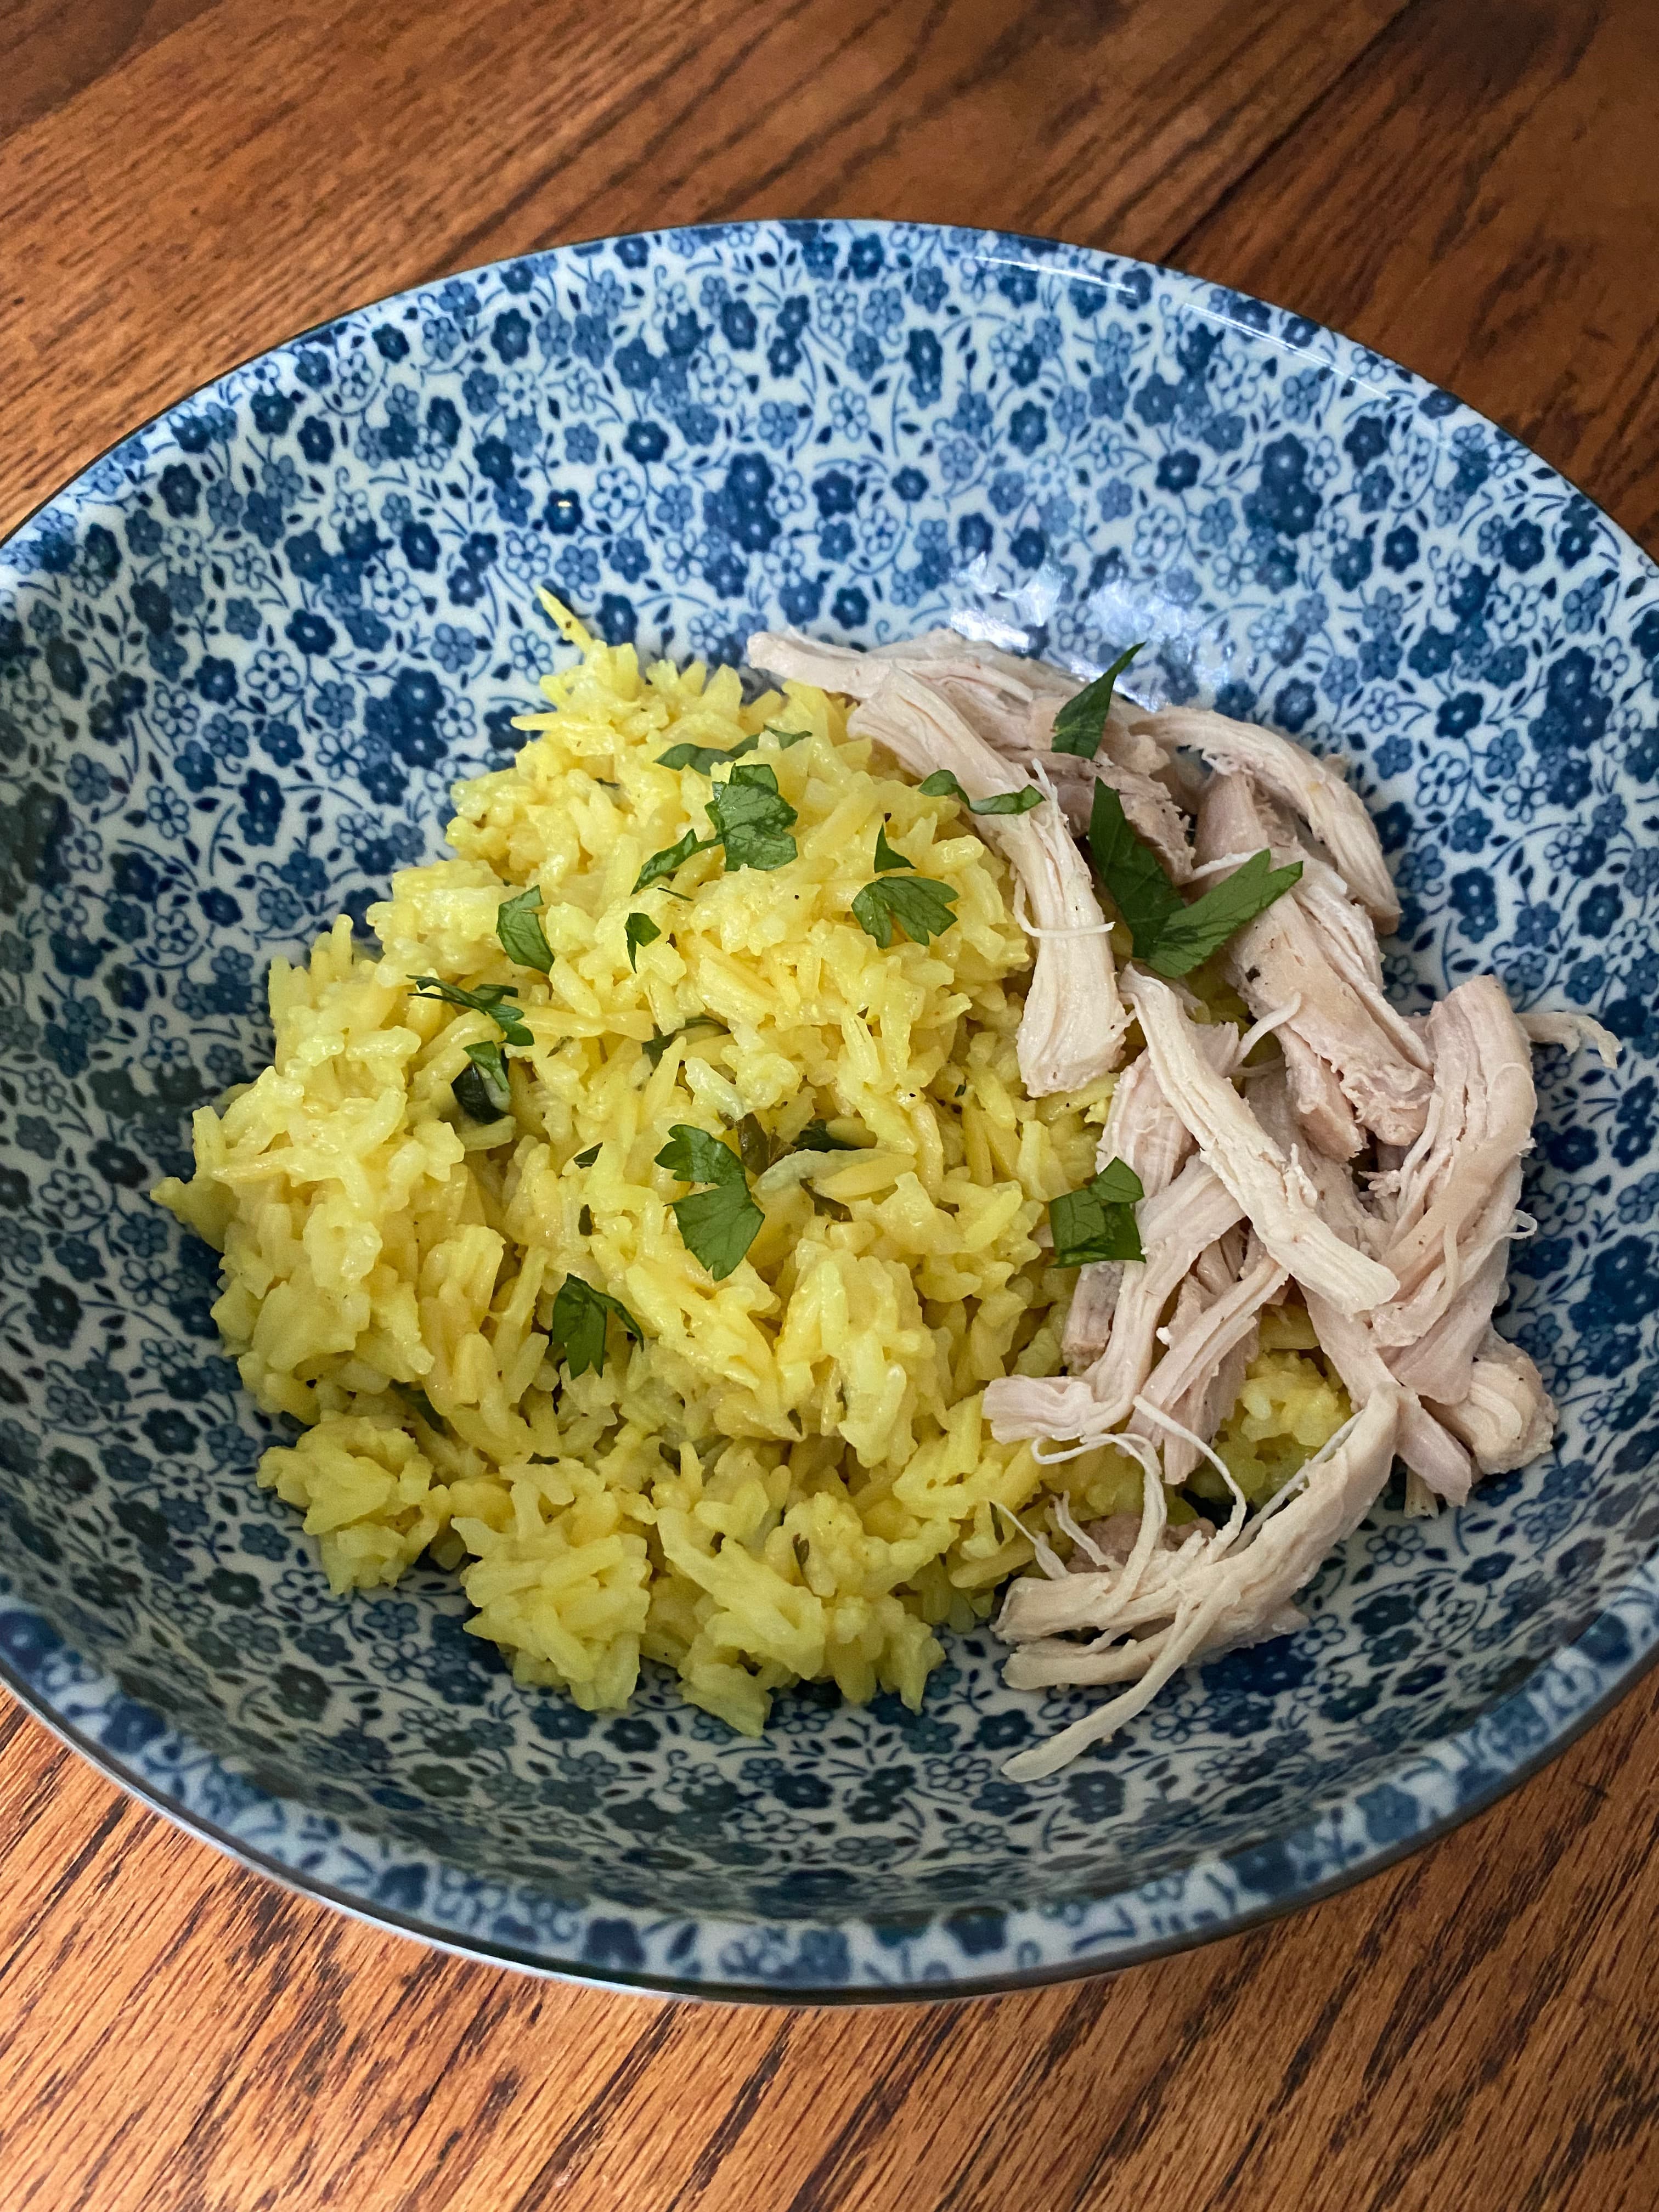 Image of Lemon Herb Rice Pilaf and Shredded Chicken.